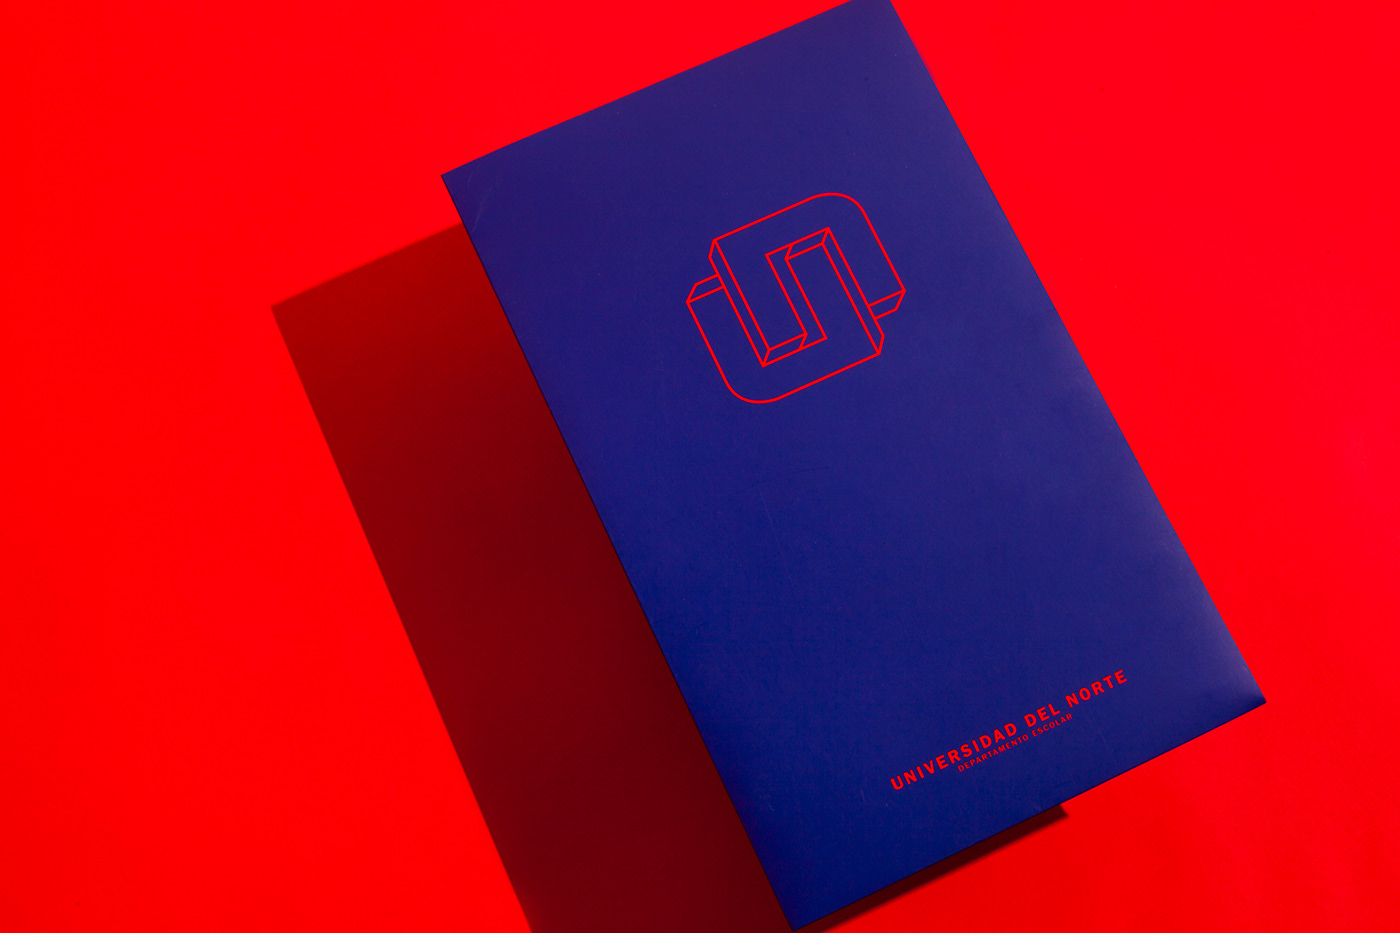 red blue University branding  Minimalism monterrey design icons Web rebranding